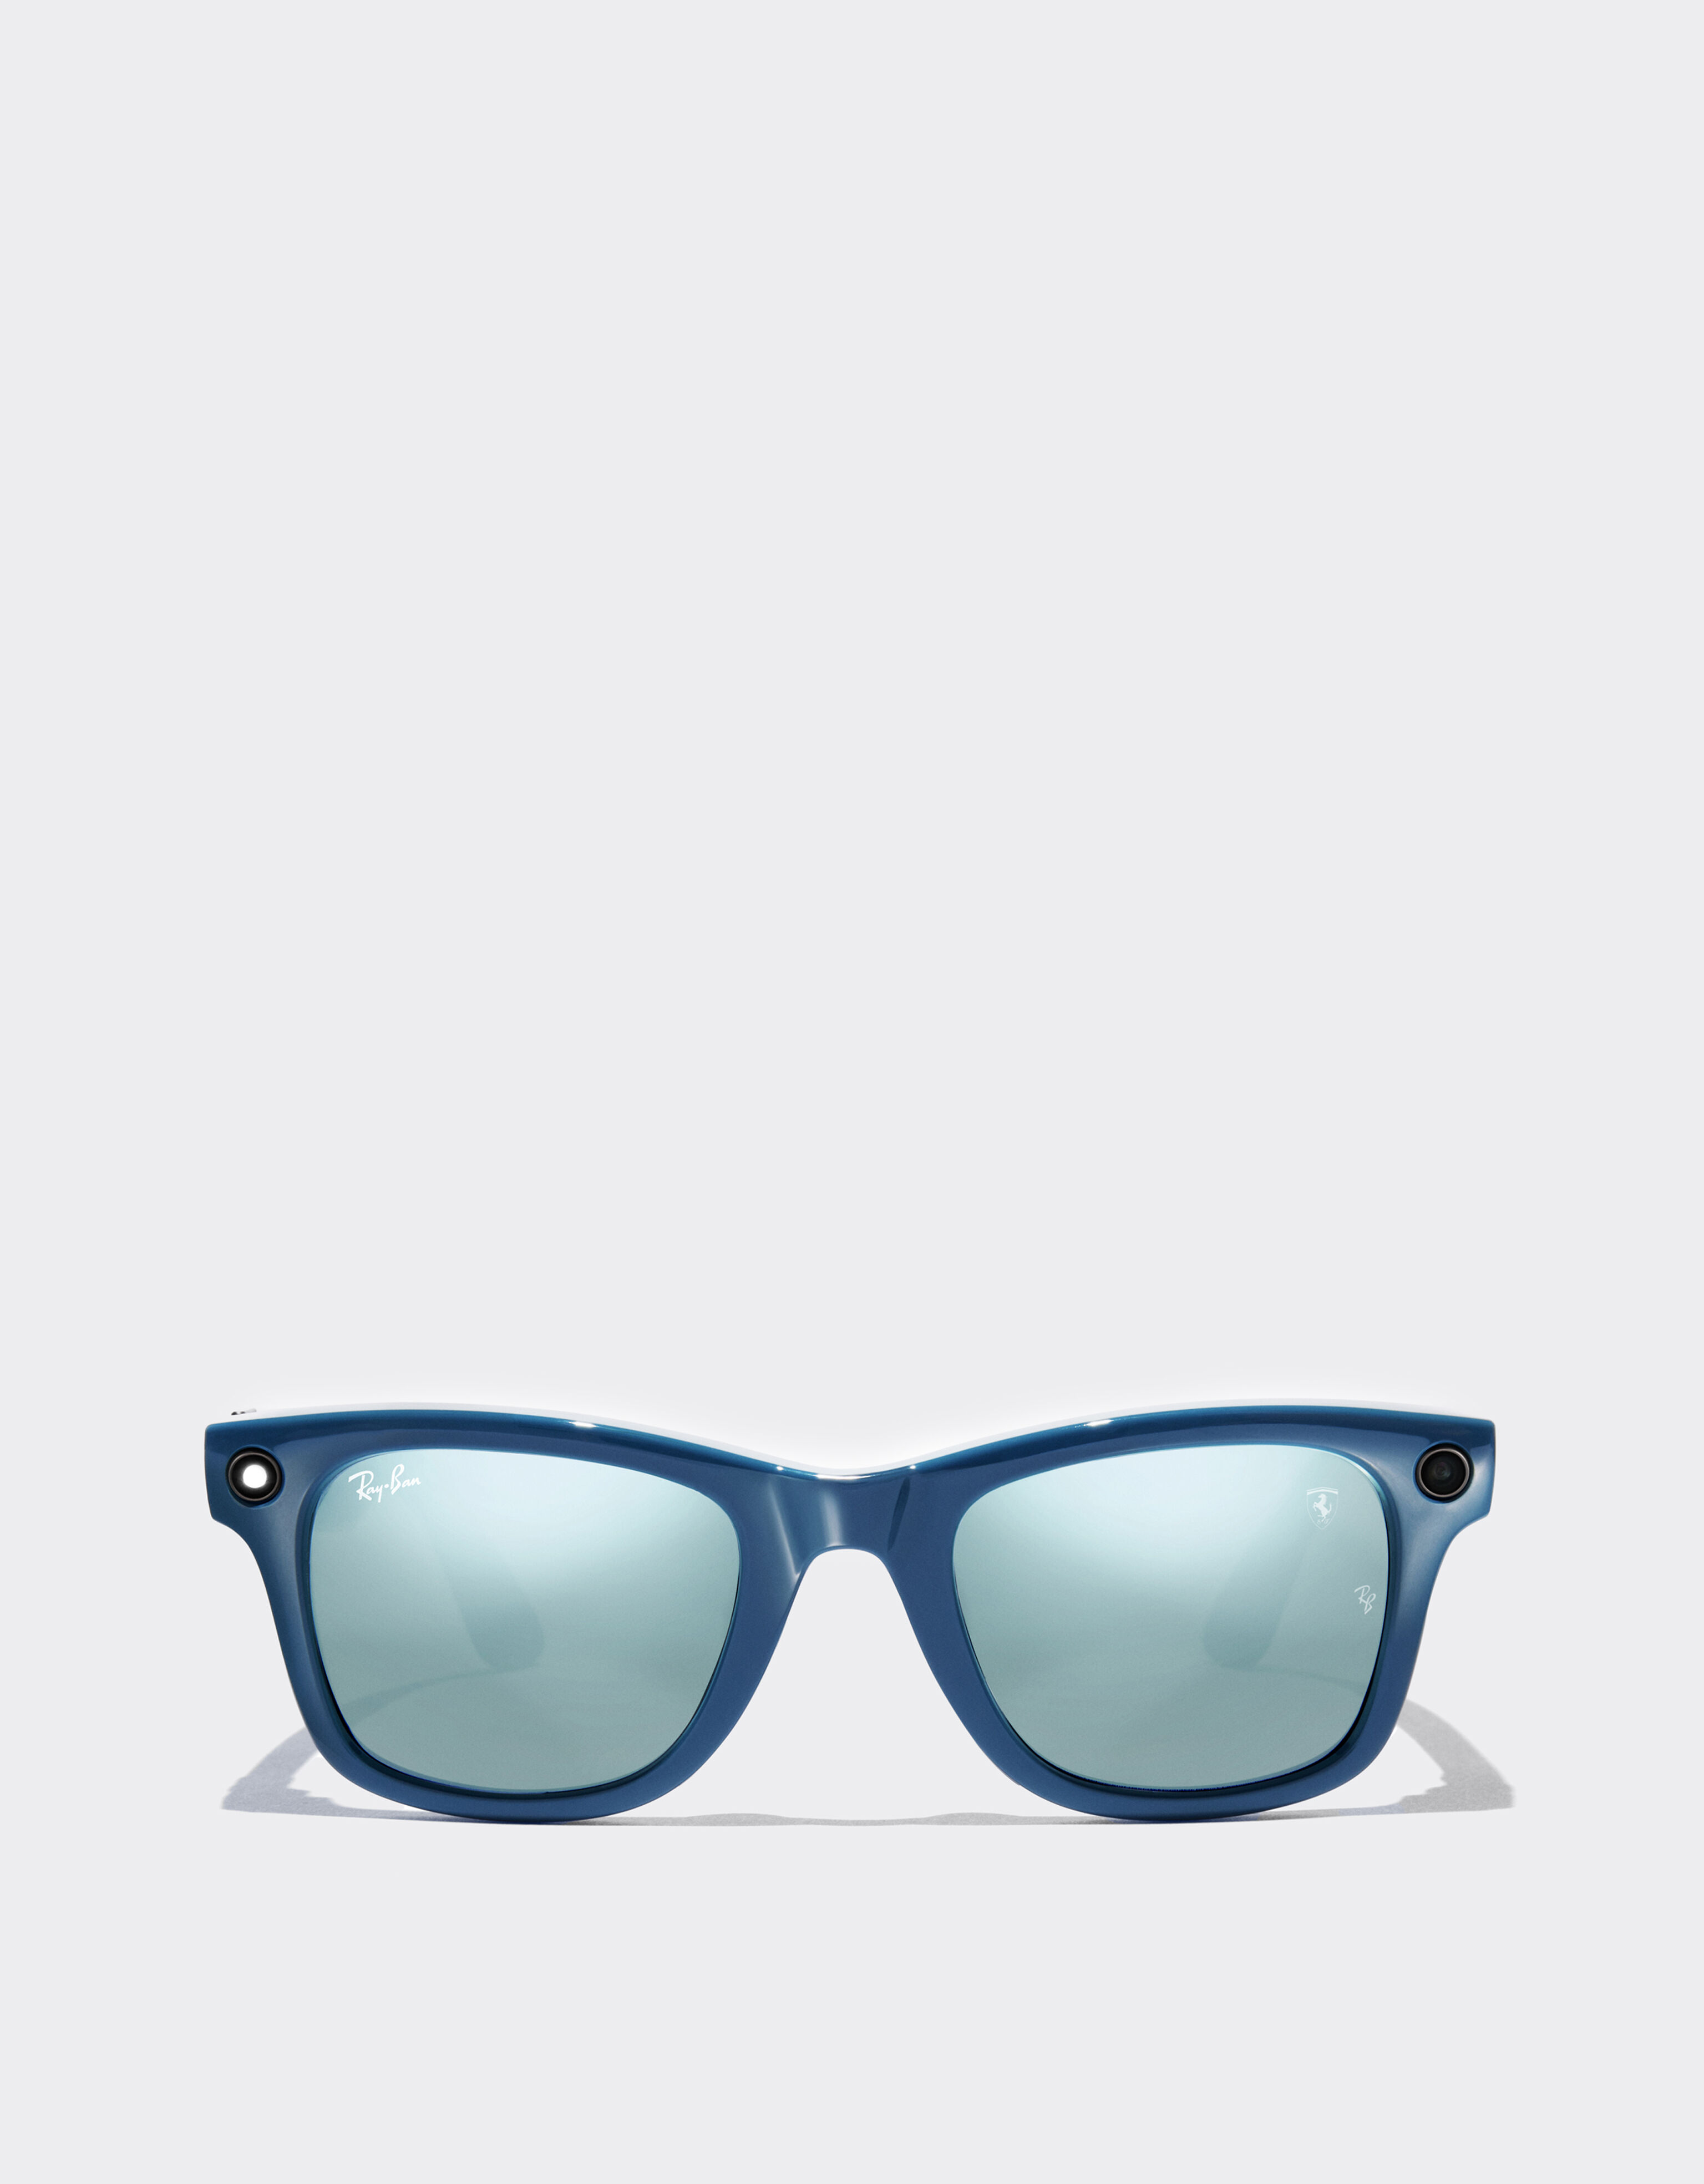 Ferrari Meta smart Ray-Ban for Scuderia Ferrari Wayfarer sunglasses – Miami Special Edition Noir mat F1257f